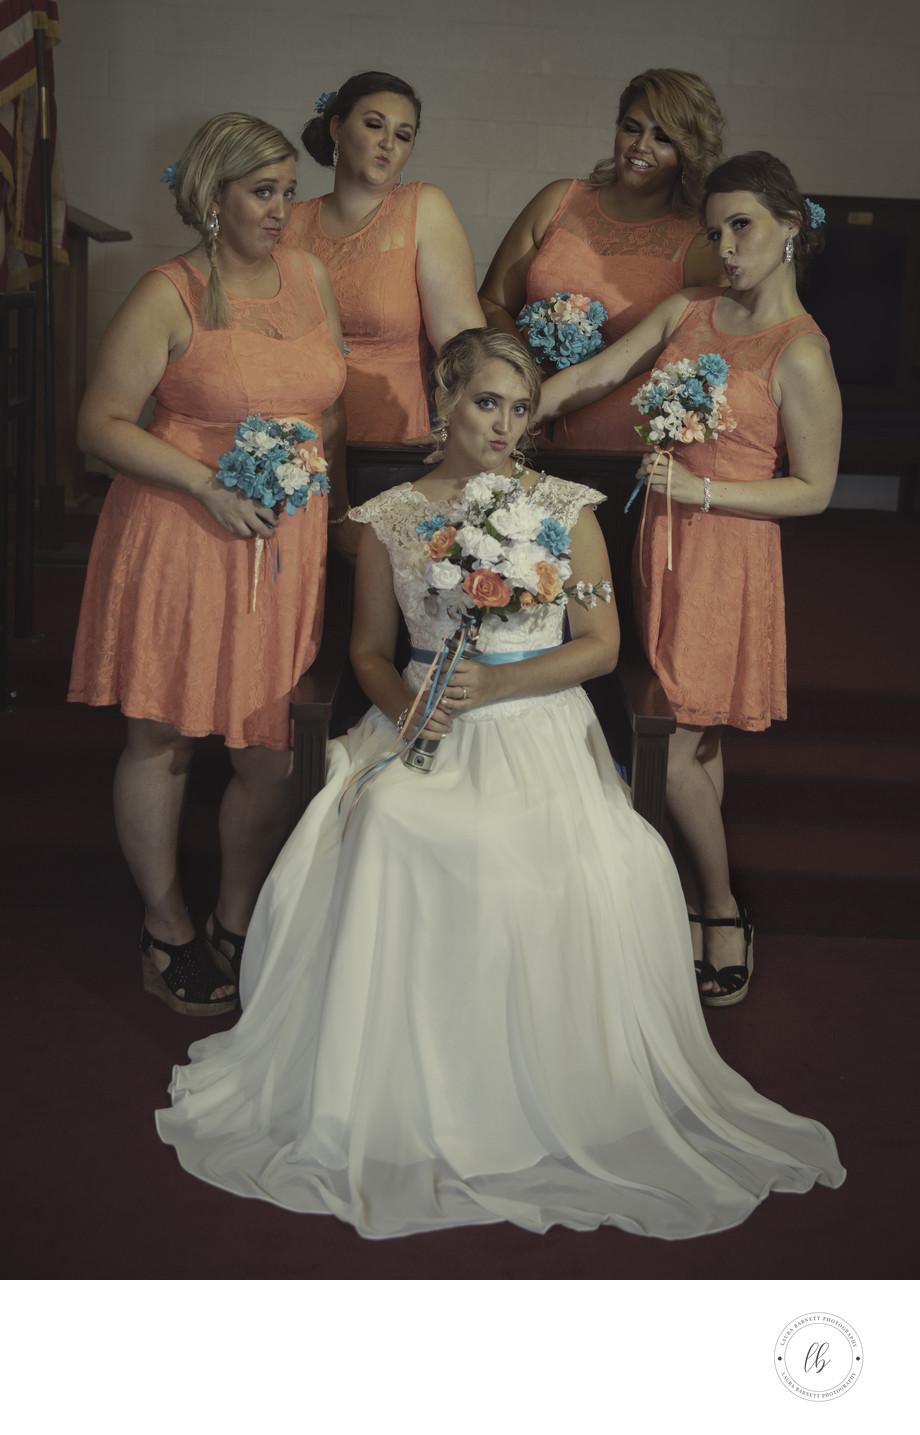 Las Vegas Wedding Photographer vanity fair style brides